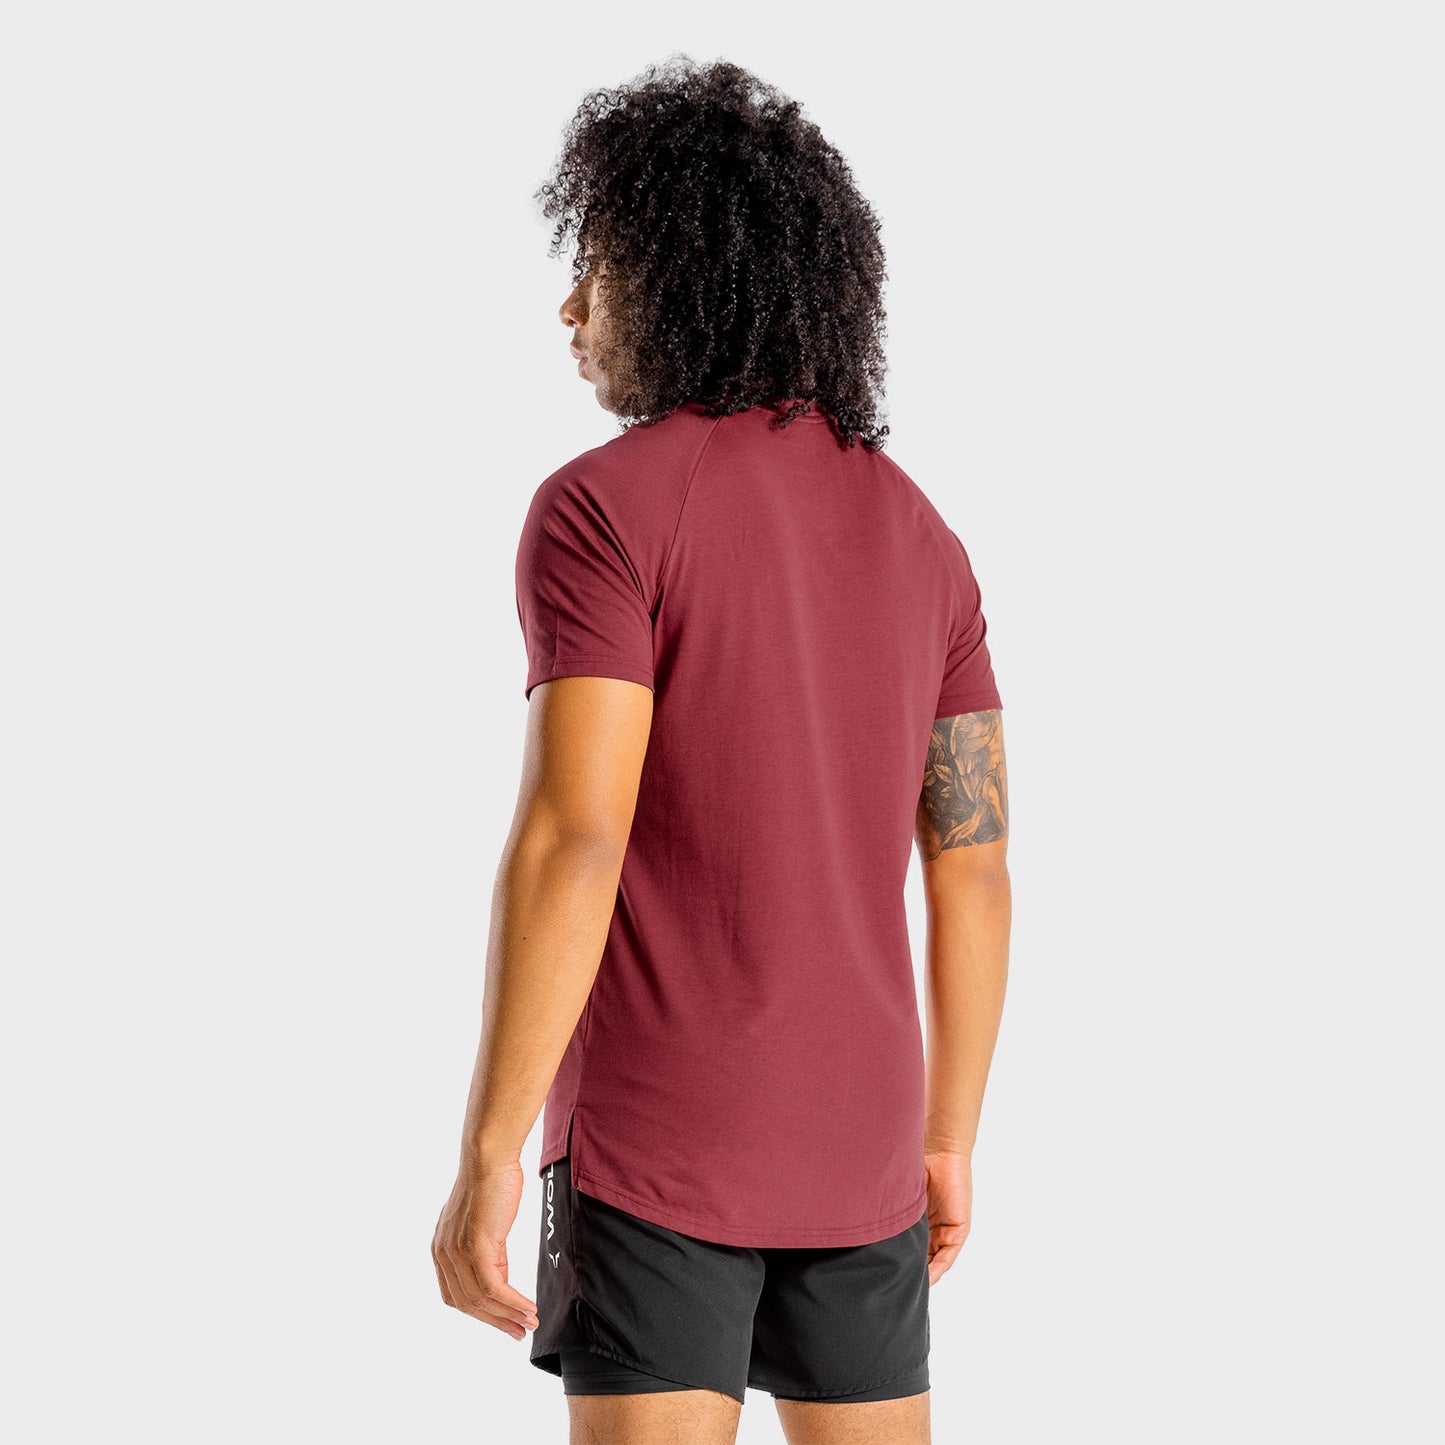 squatwolf-workout-shirts-for-men-primal-men-tee-red-gym-wear